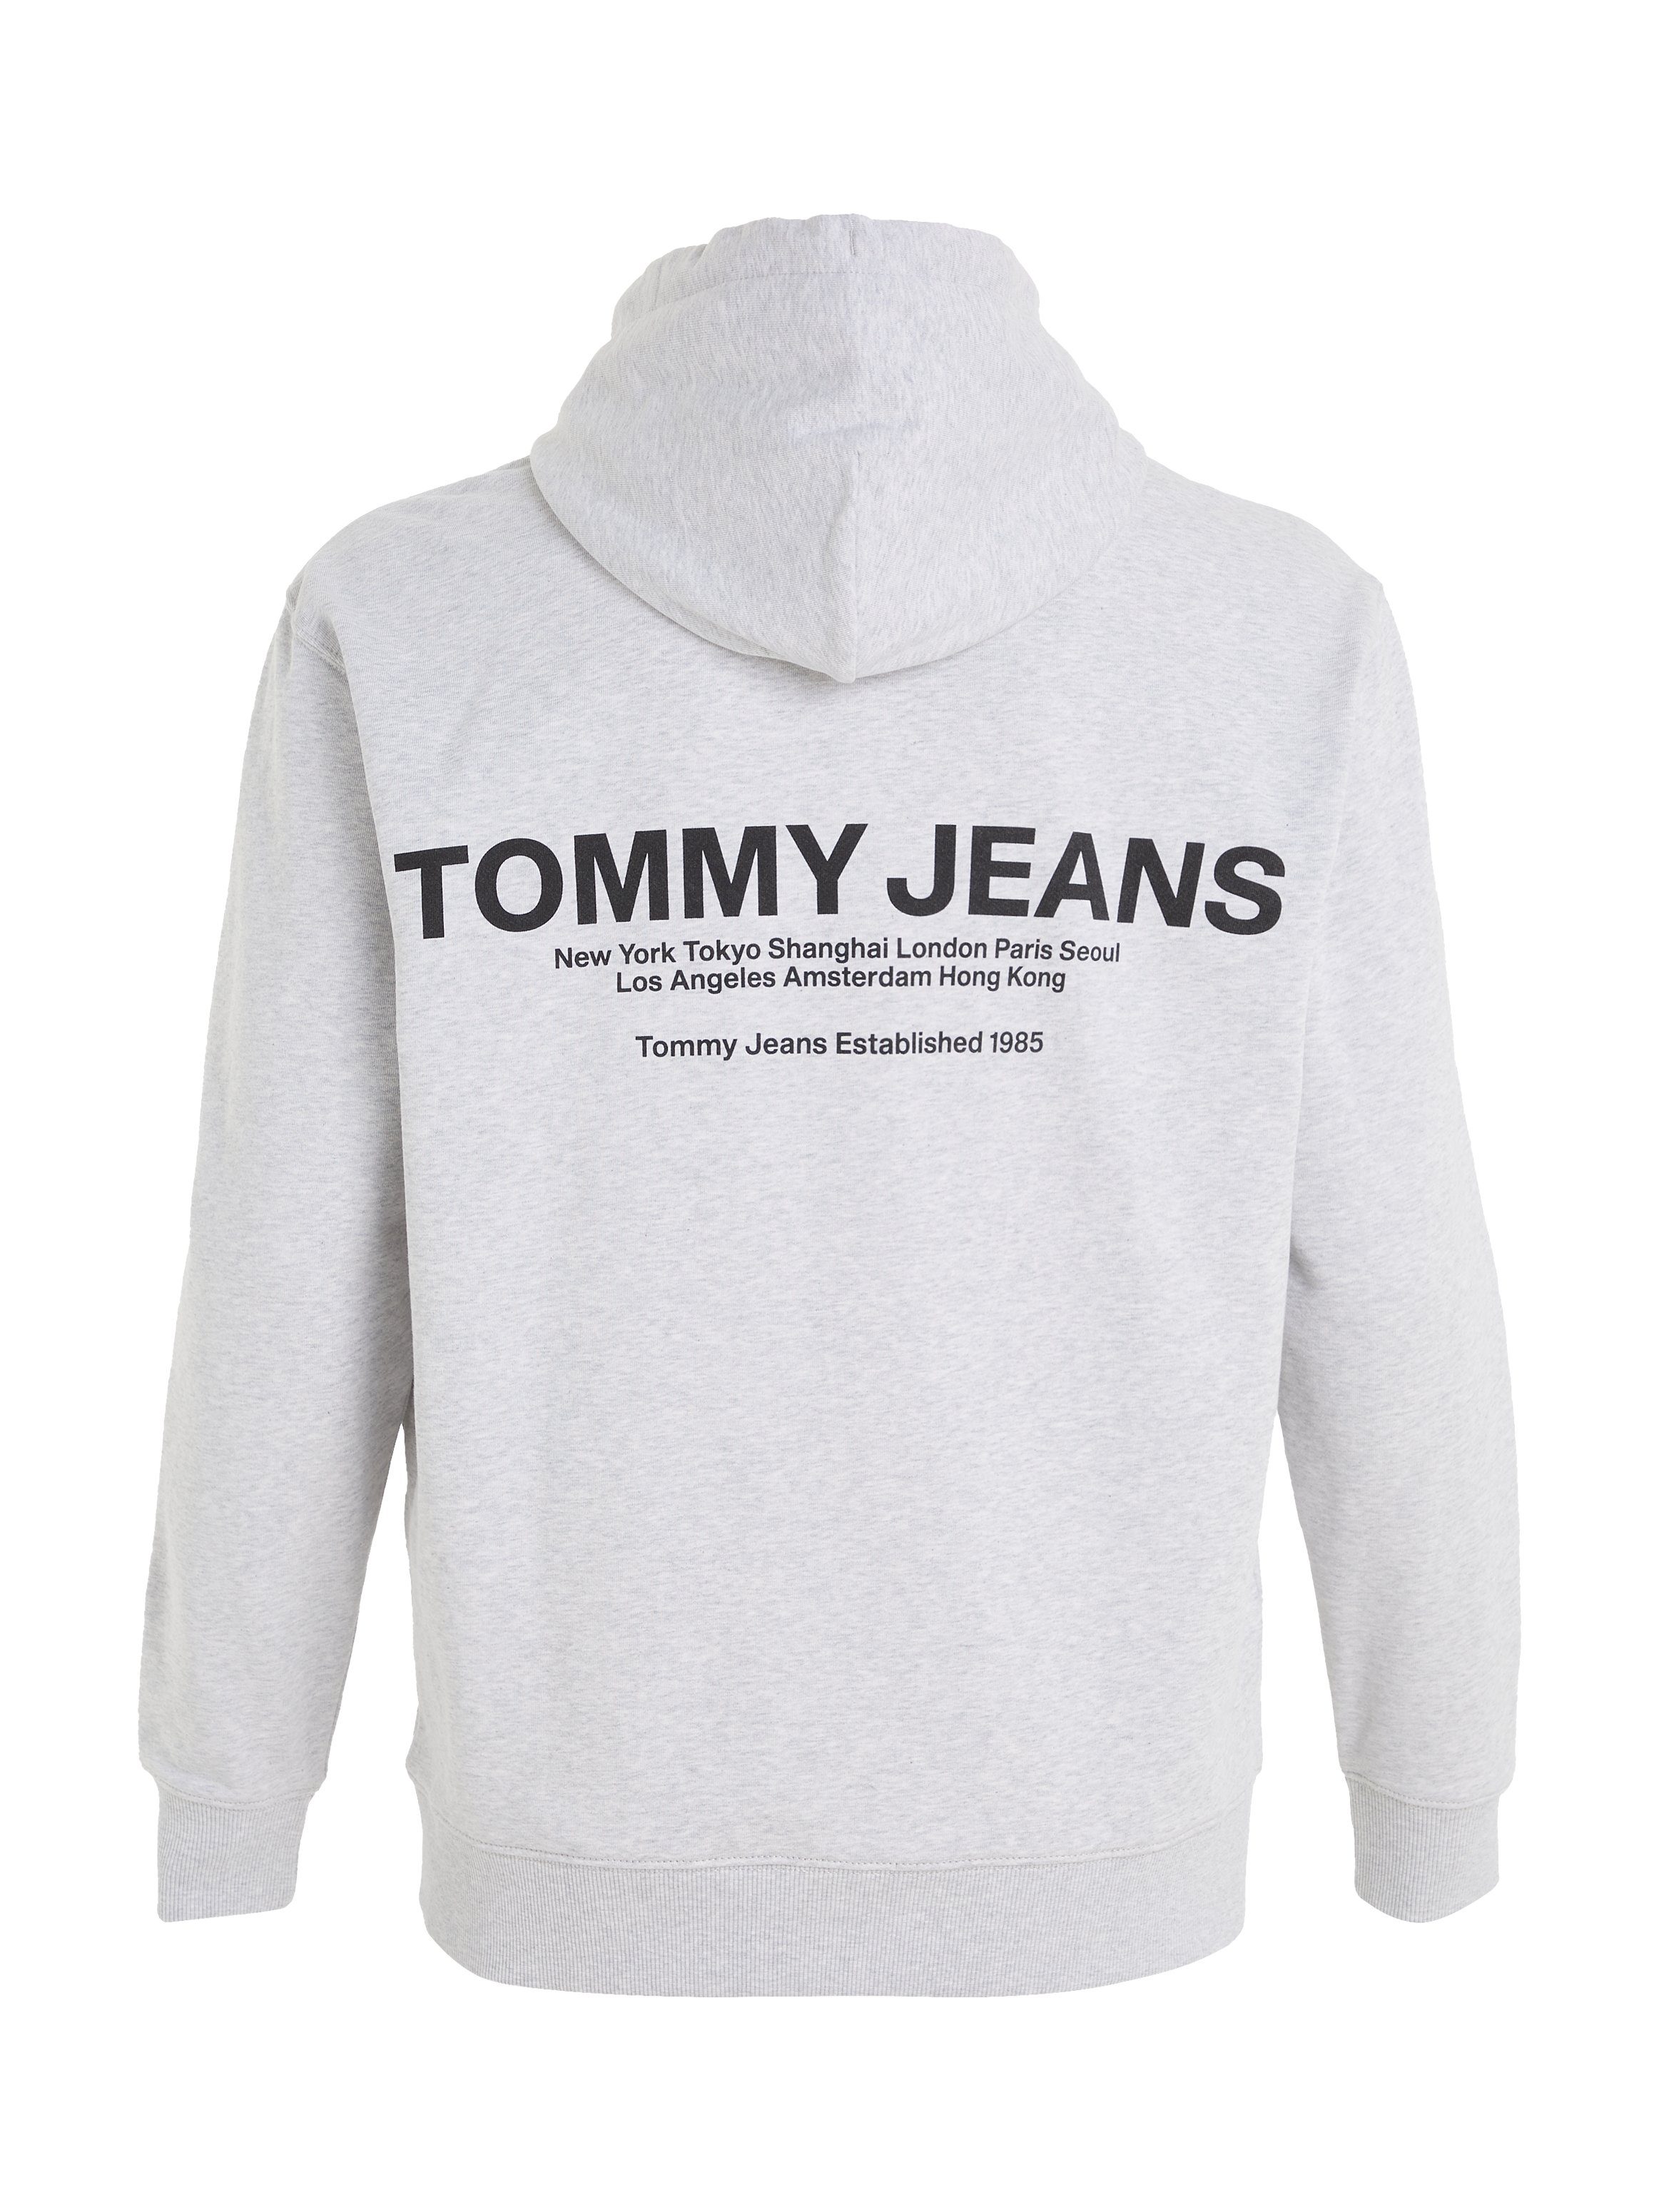 Plus HOOD Tommy Jeans REG Grey Silver TJM PLUS Hoodie GRAPHIC Htr ENTRY